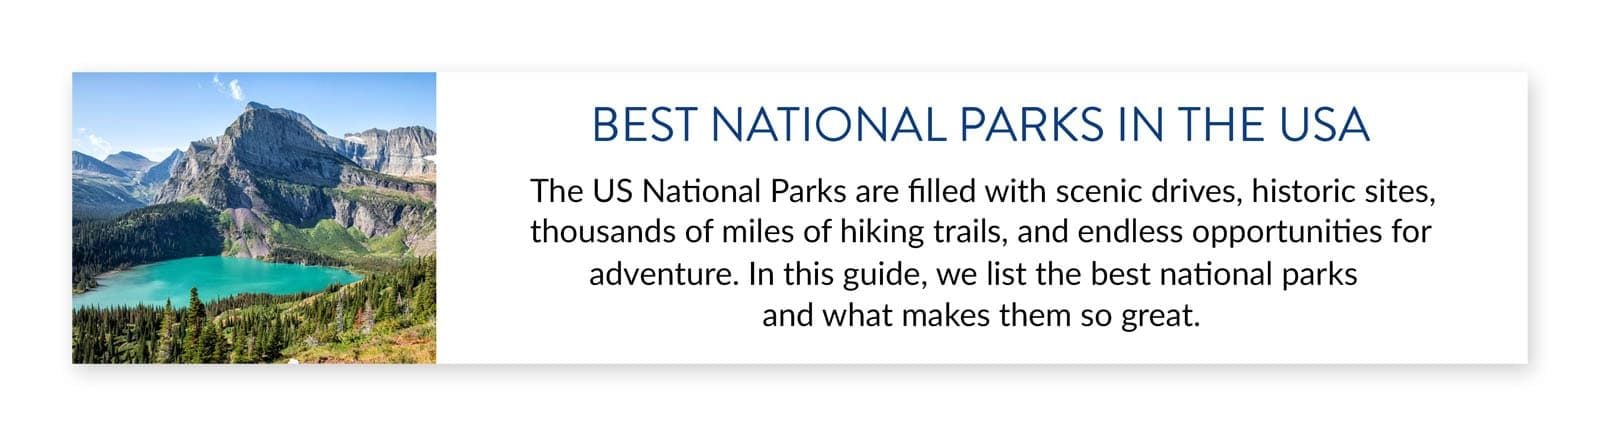 Best National Parks USA